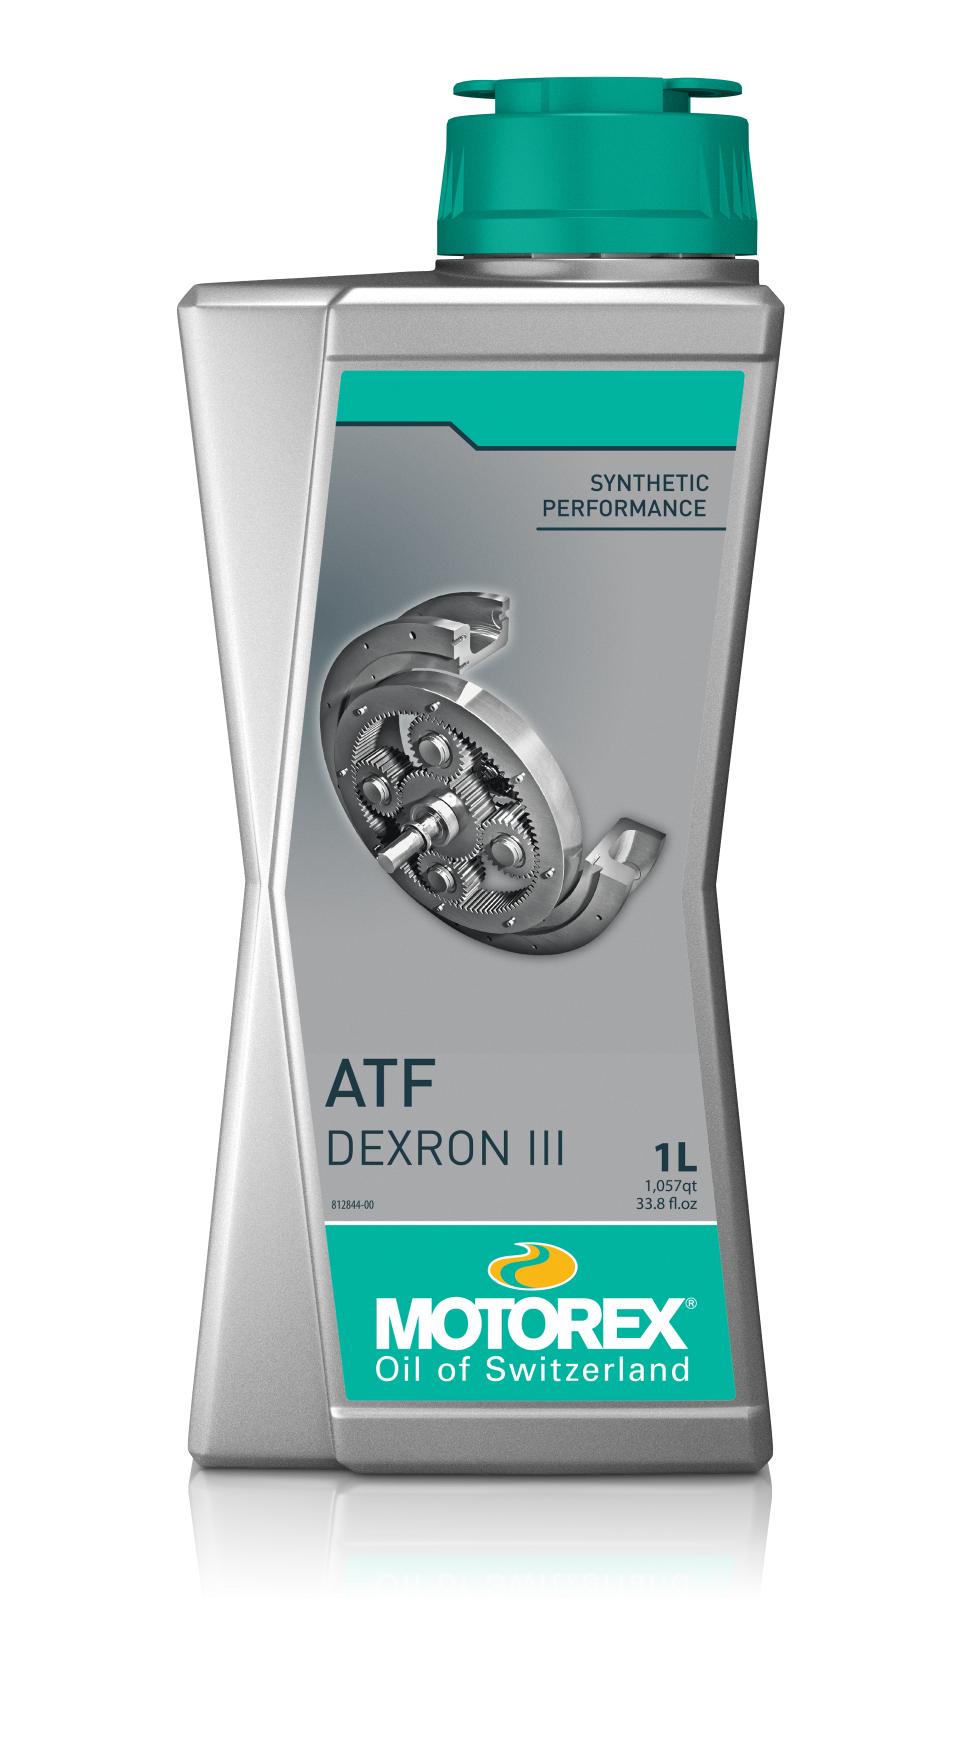 MOTOREX ATF DEXON III